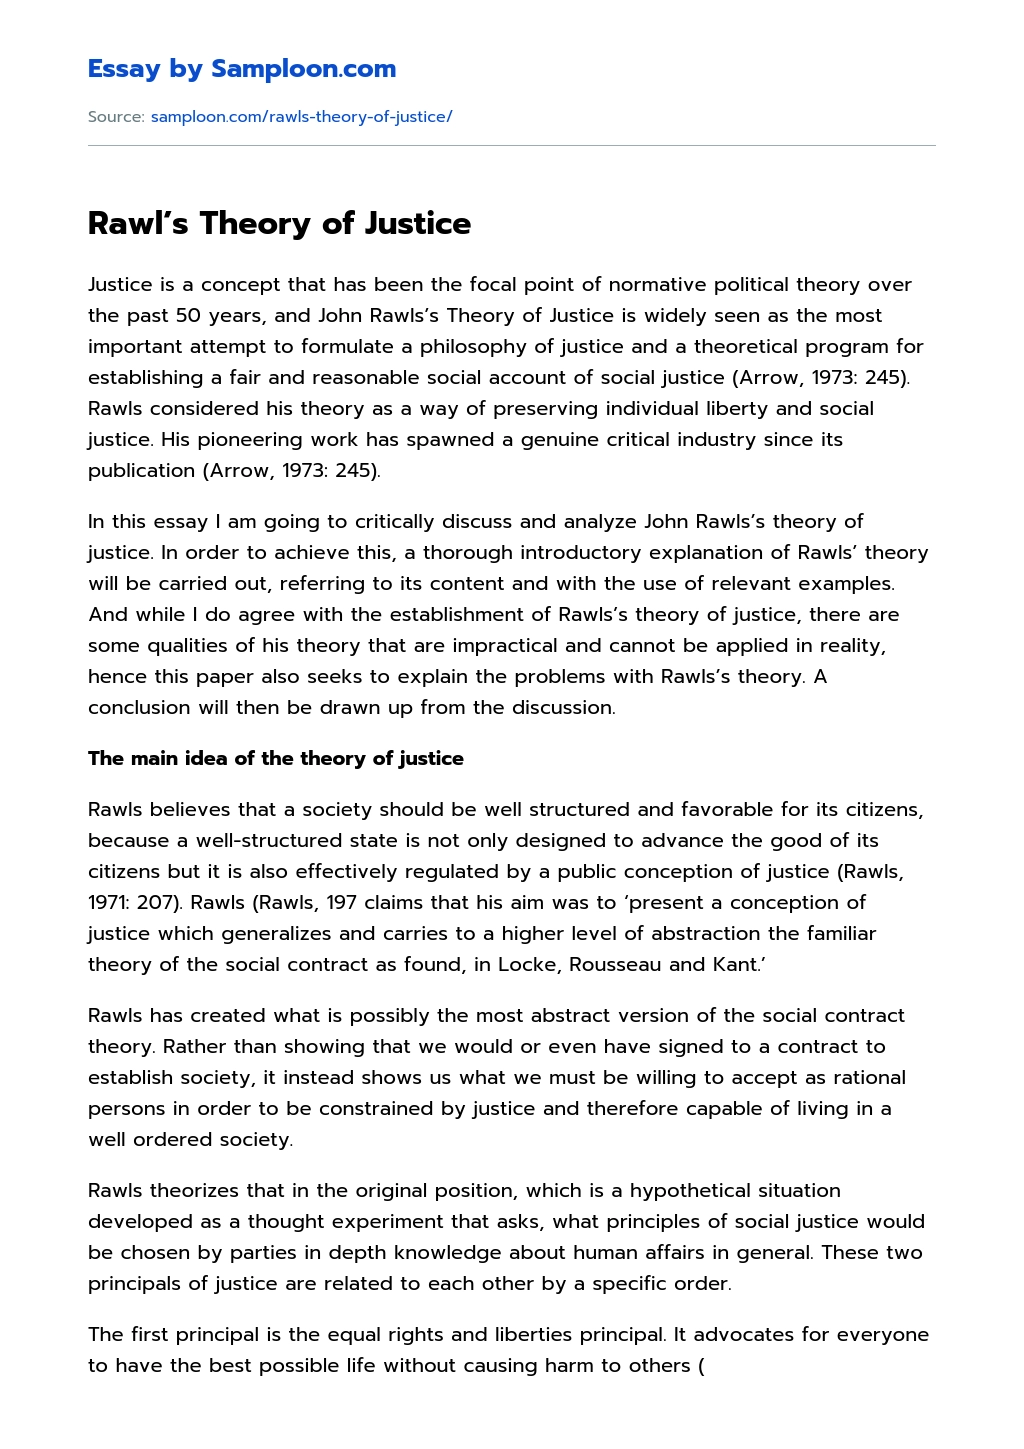 Rawl’s Theory of Justice Summary essay